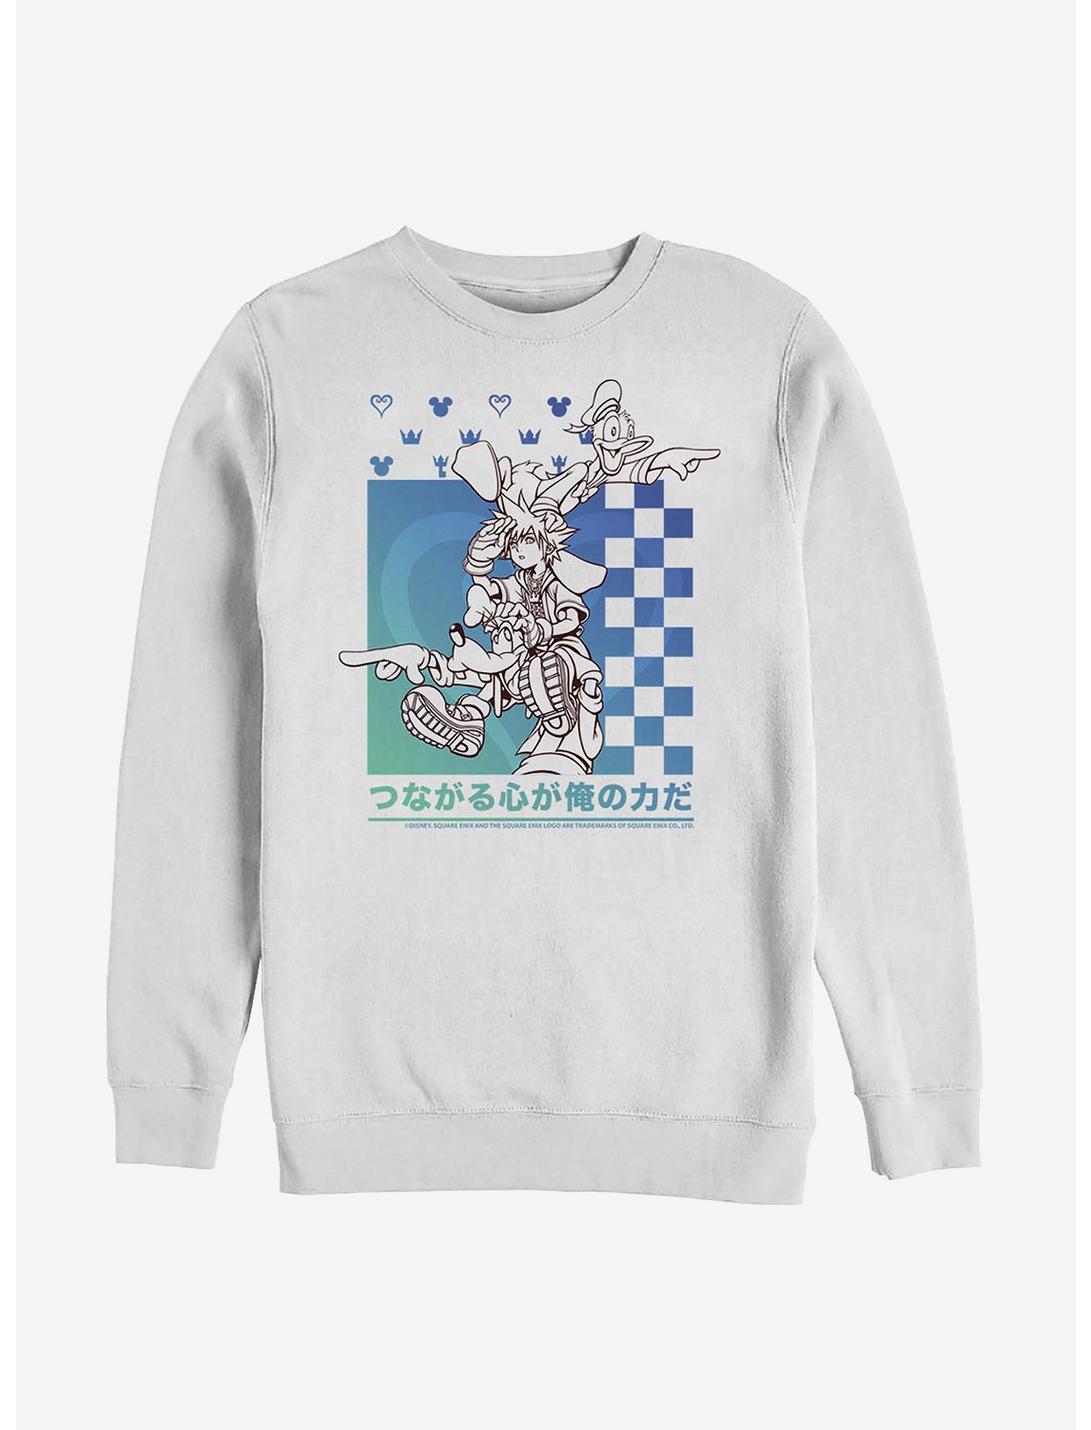 Disney Kingdom Hearts Power Friends Sweatshirt, WHITE, hi-res